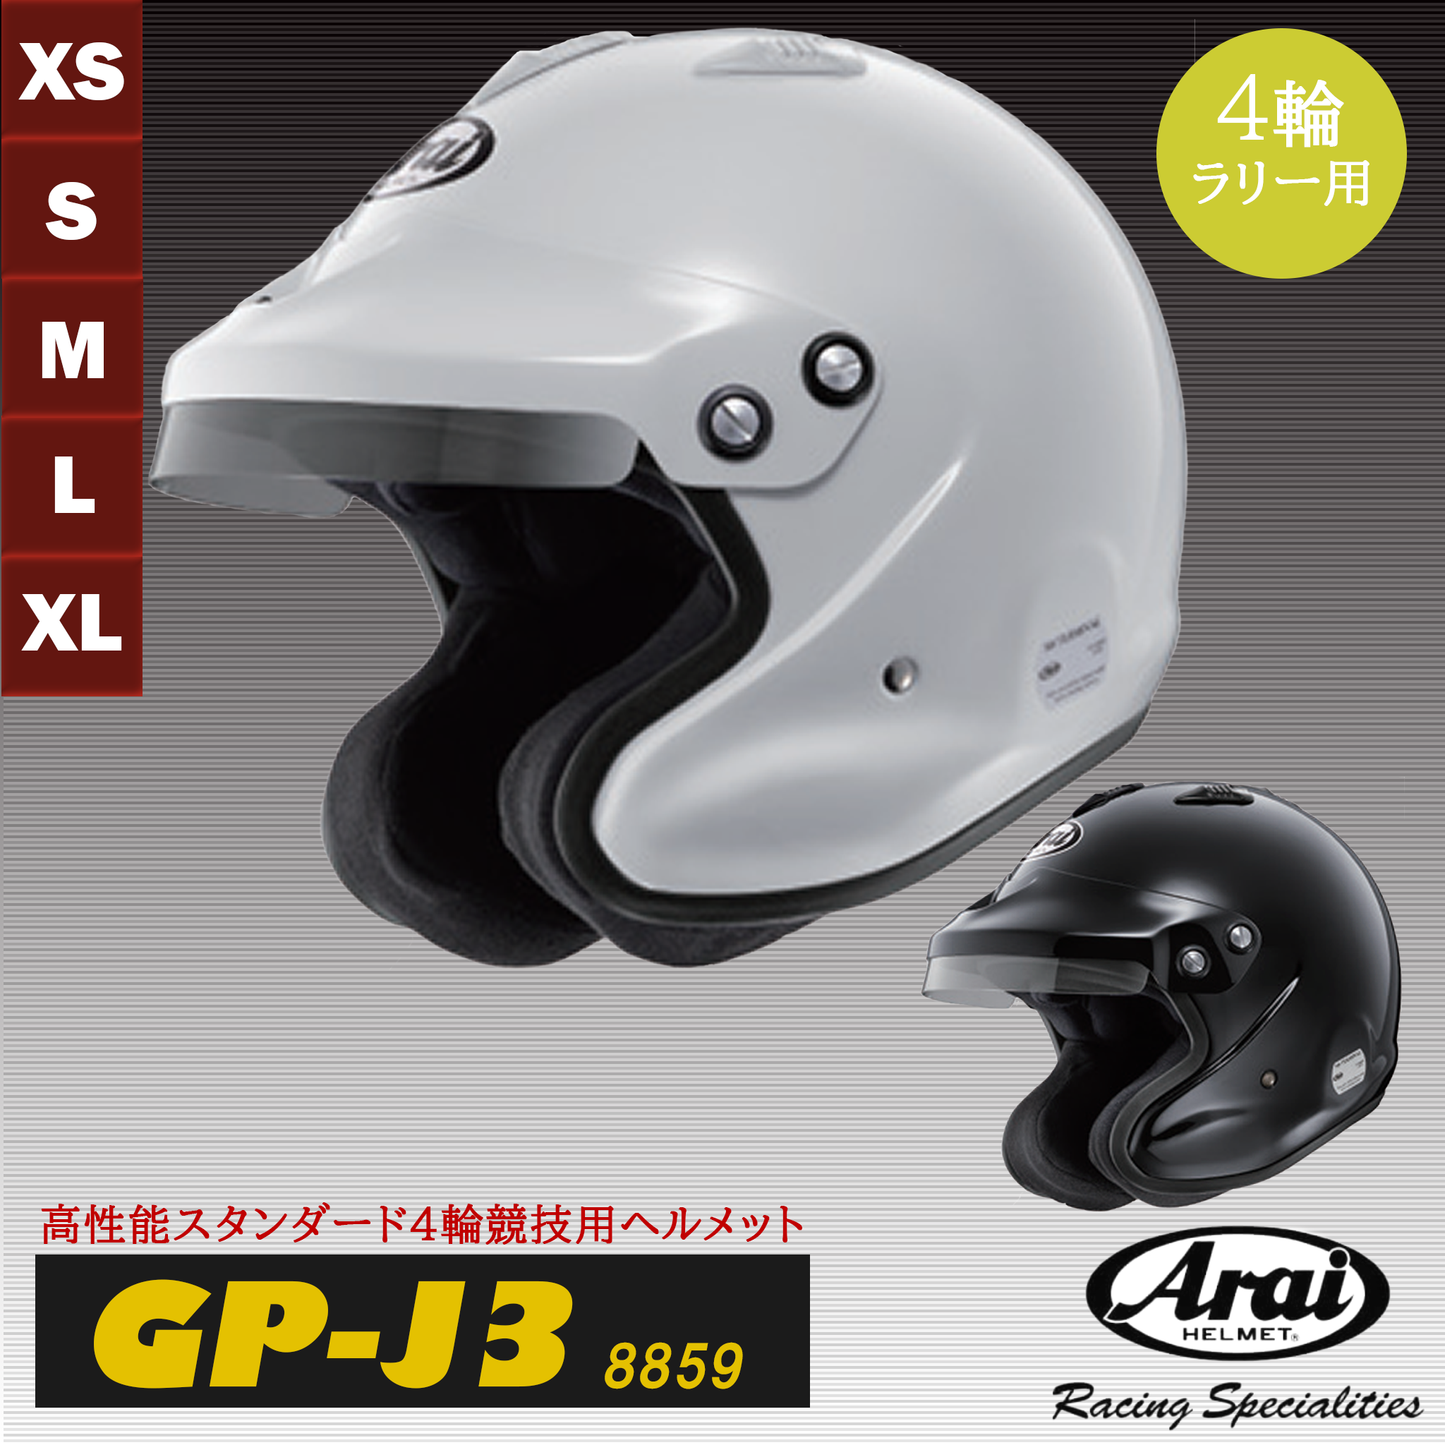 [GP-J3 8859] 4輪ラリー用ヘルメット Arai